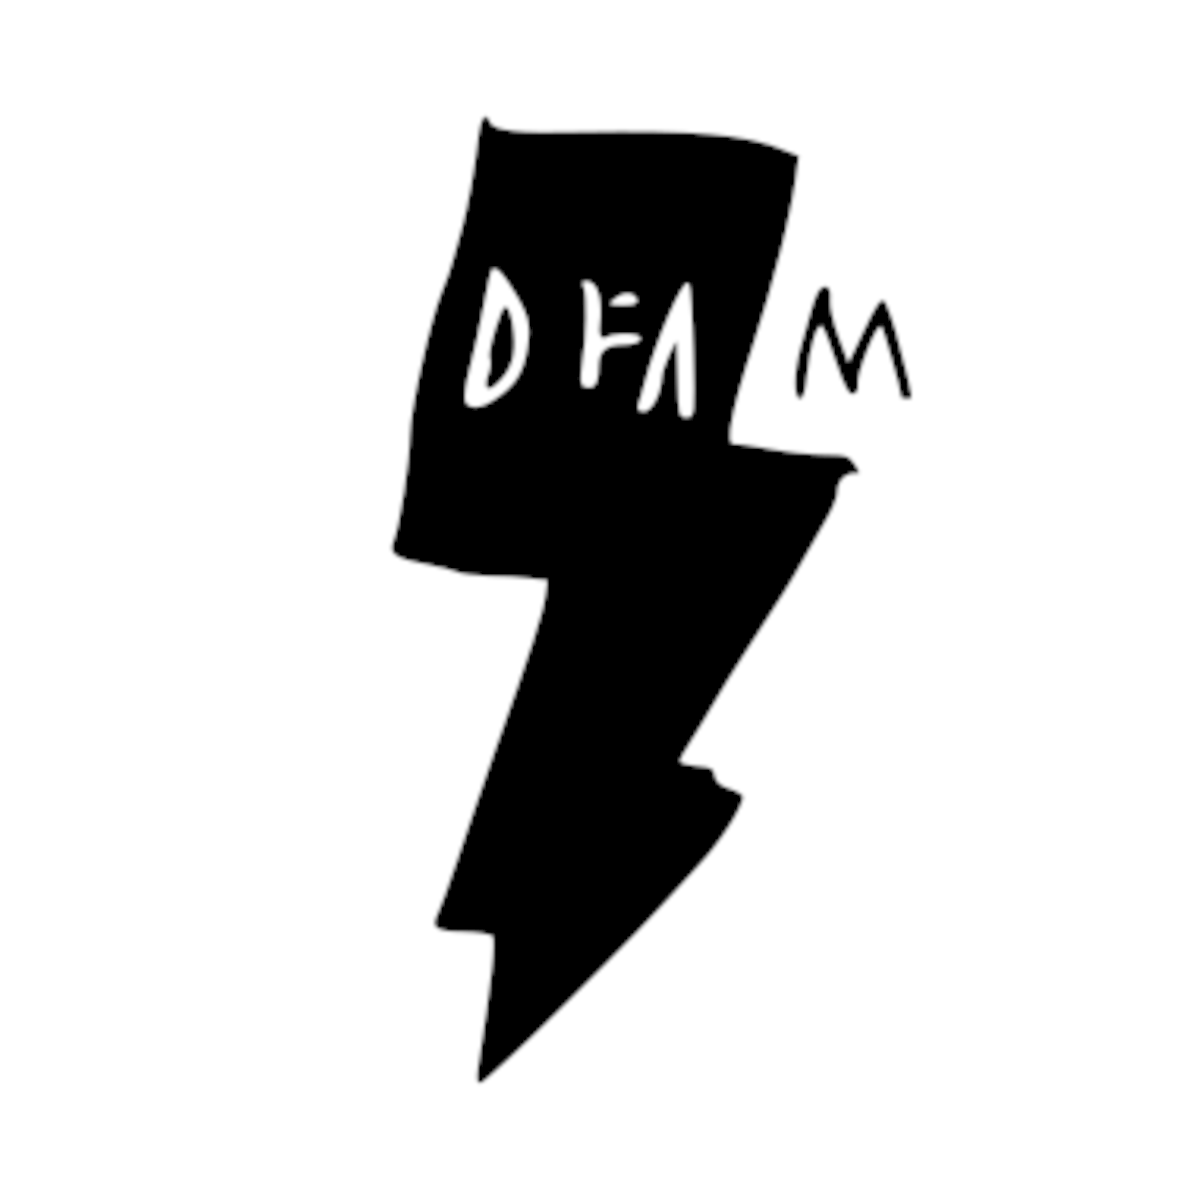 CDFAM Logo